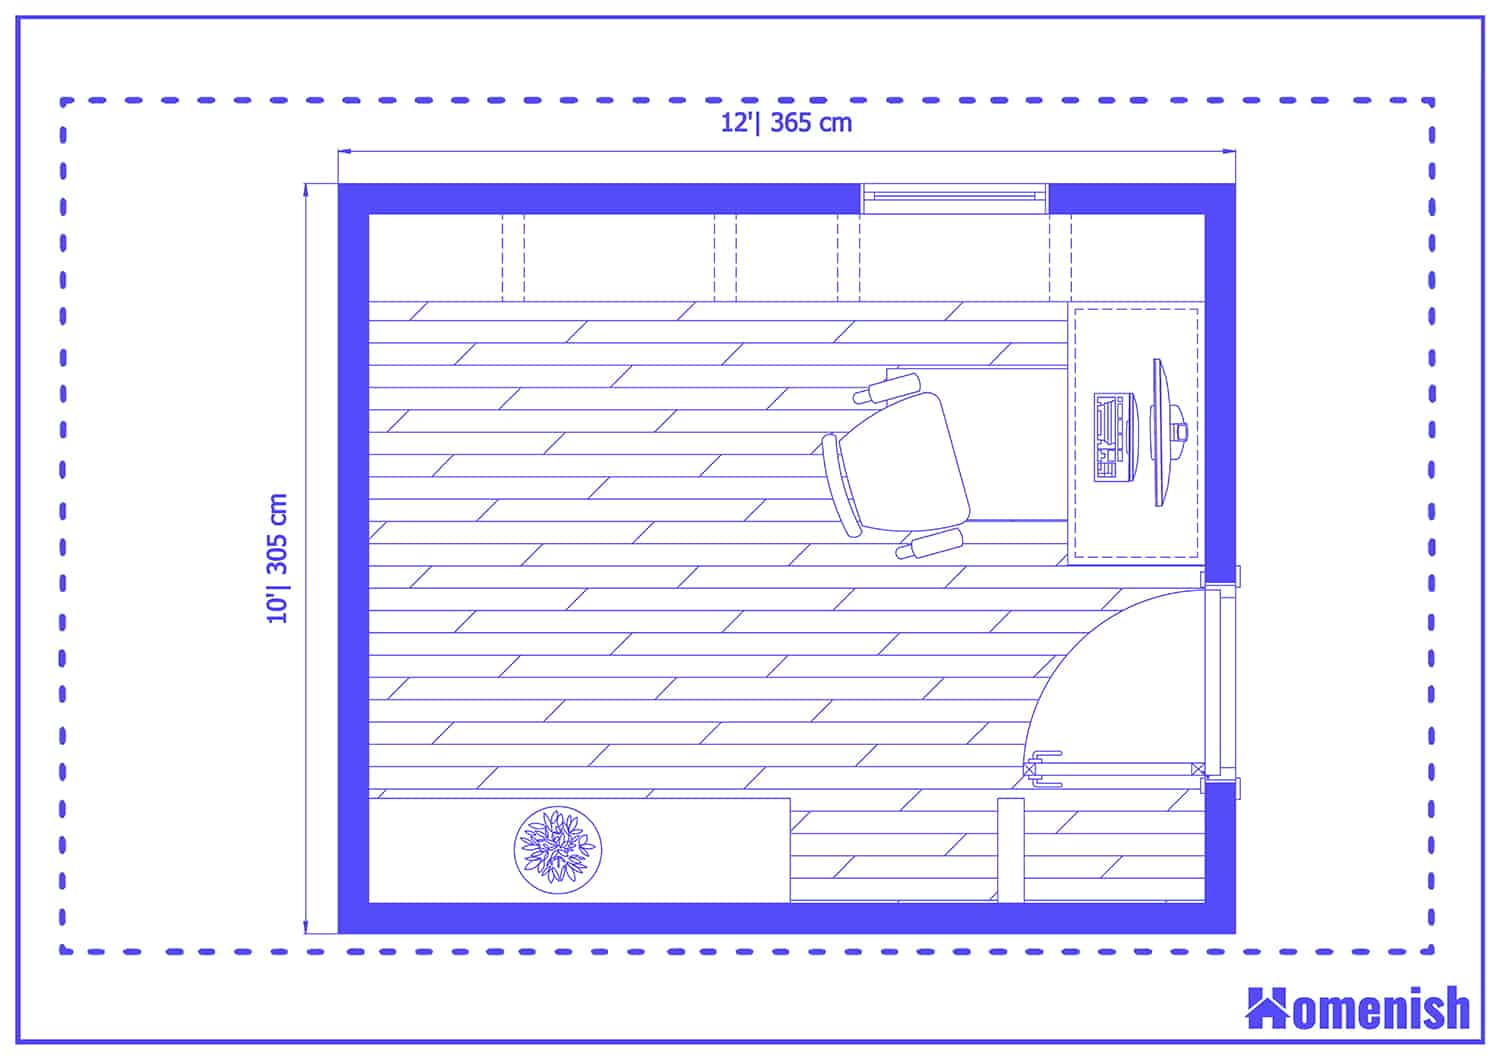 Office in Attic Layout Floor Plan